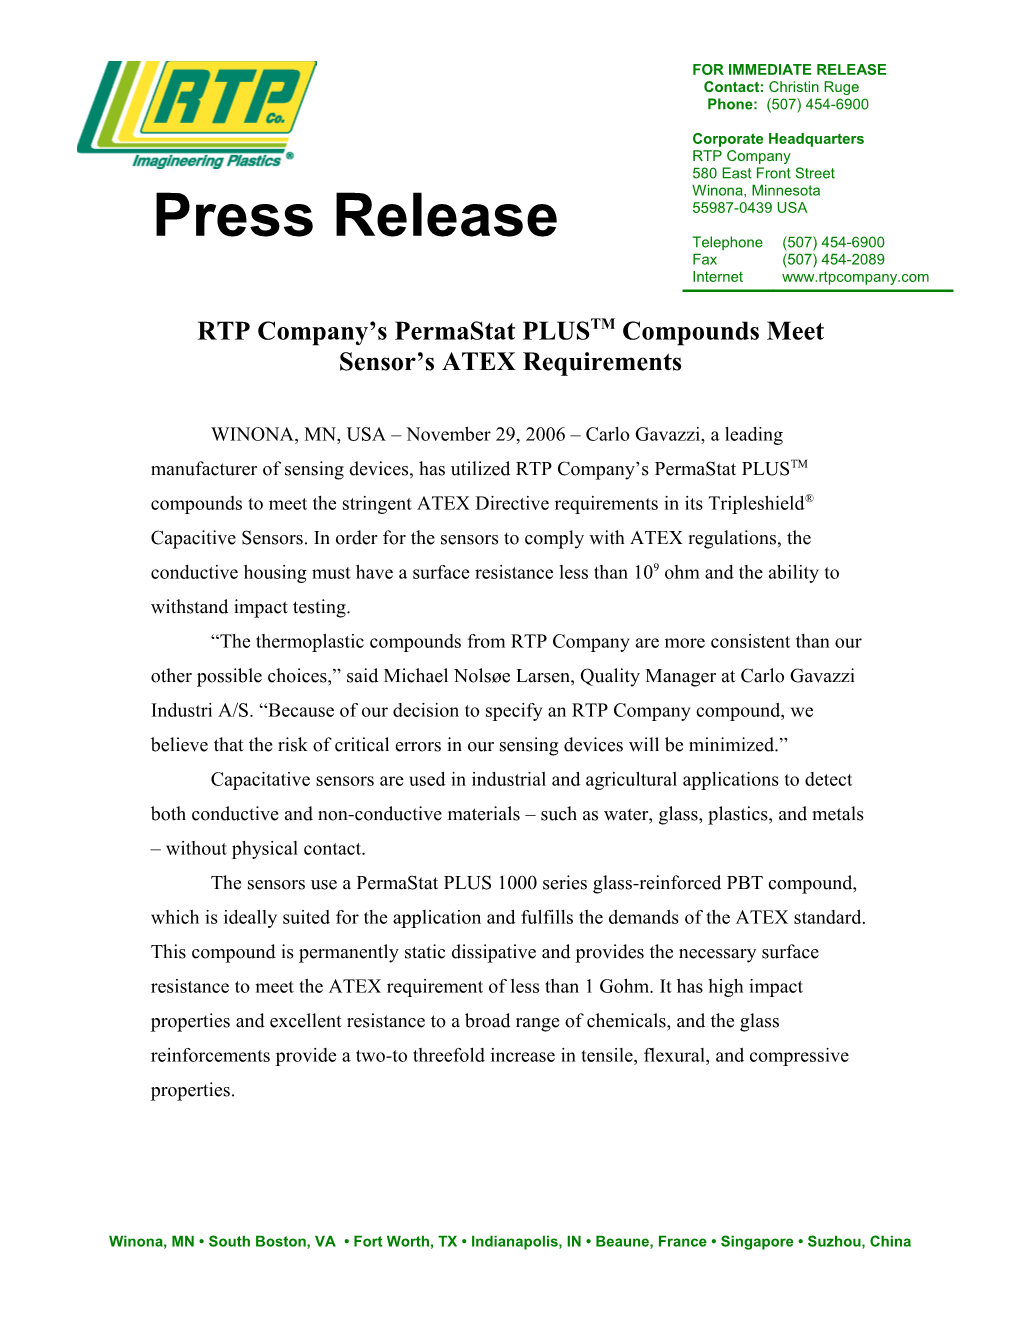 RTP Company Launches Elastomer Division